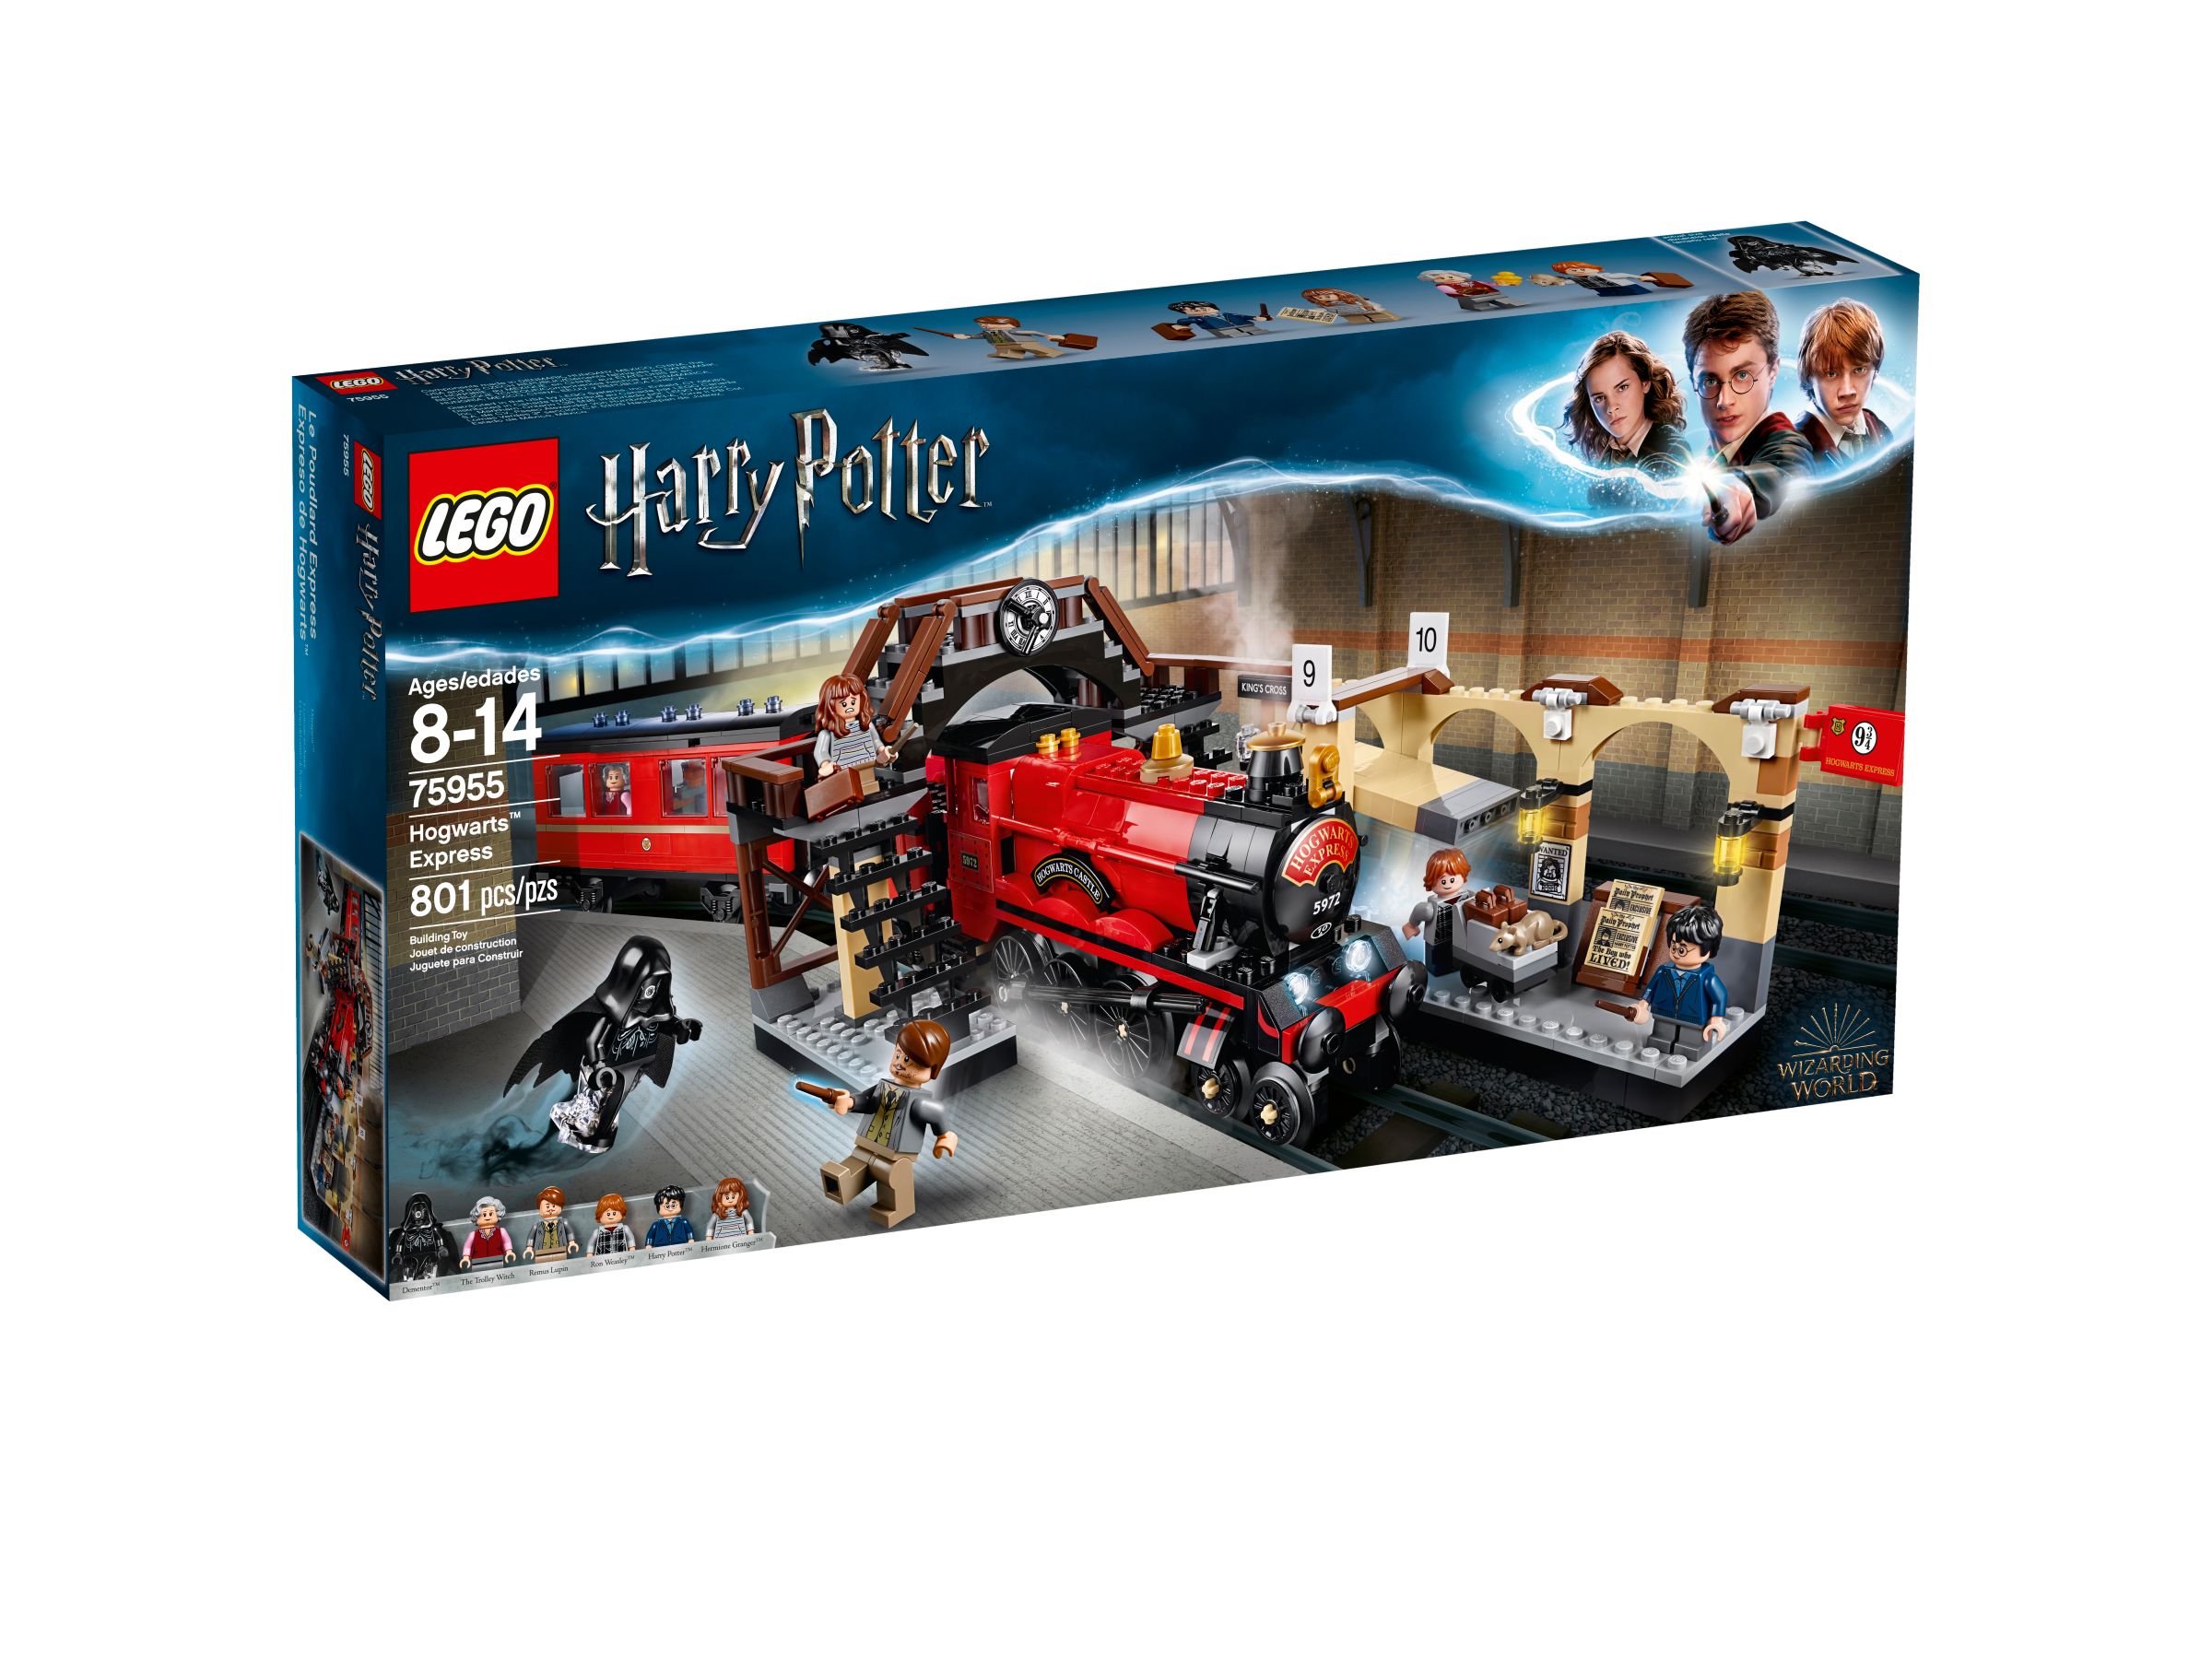 LEGO Harry Potter 75955 Hogwarts™ Express LEGO_75955_alt1.jpg